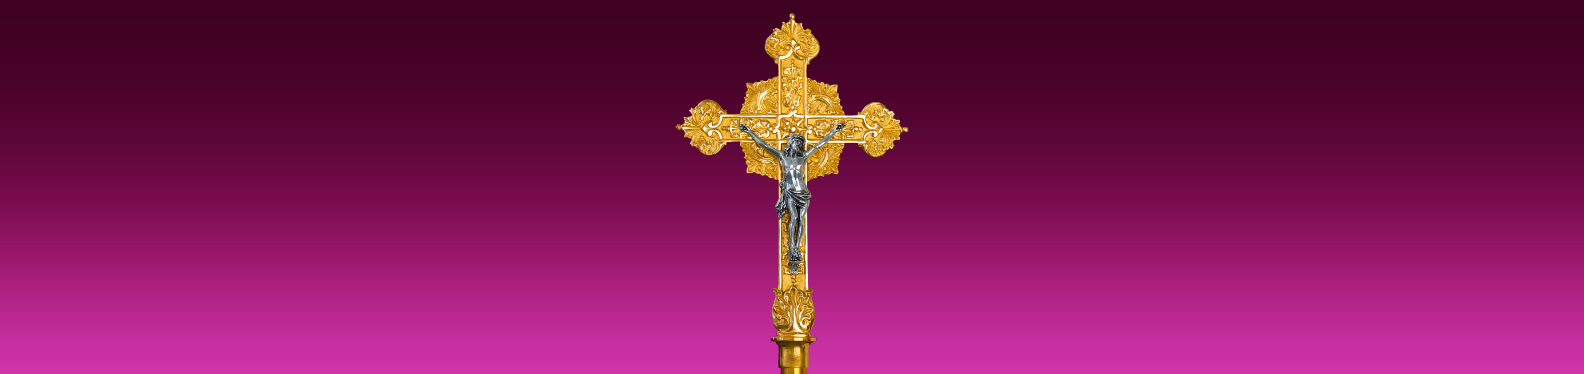 Gold Crucifix on a purple lenten background